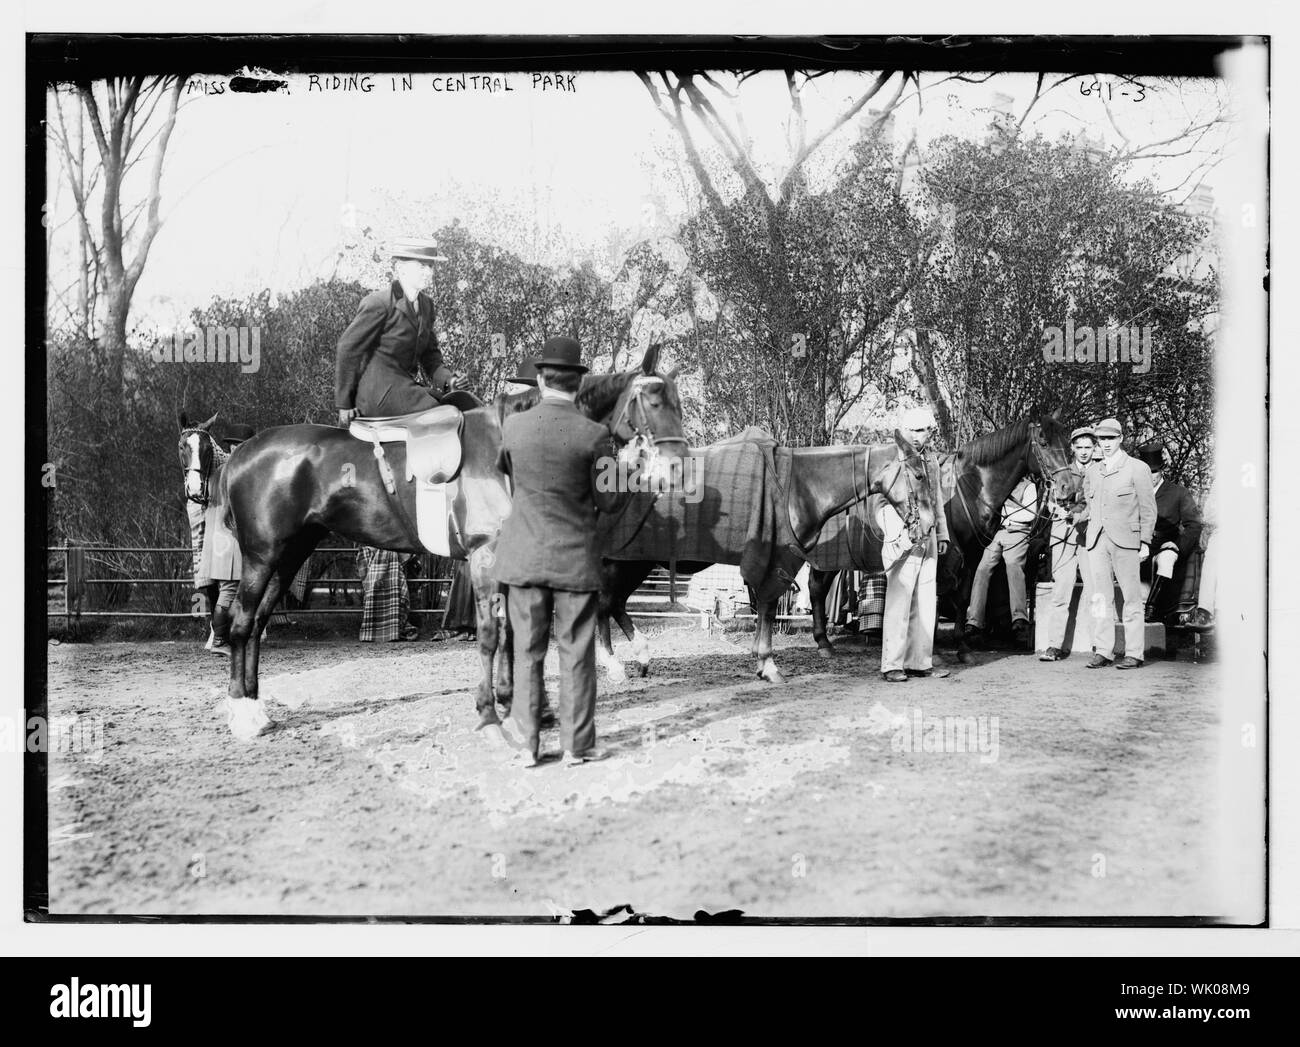 In horseback riding ring, Central Park, New York Stock Photo